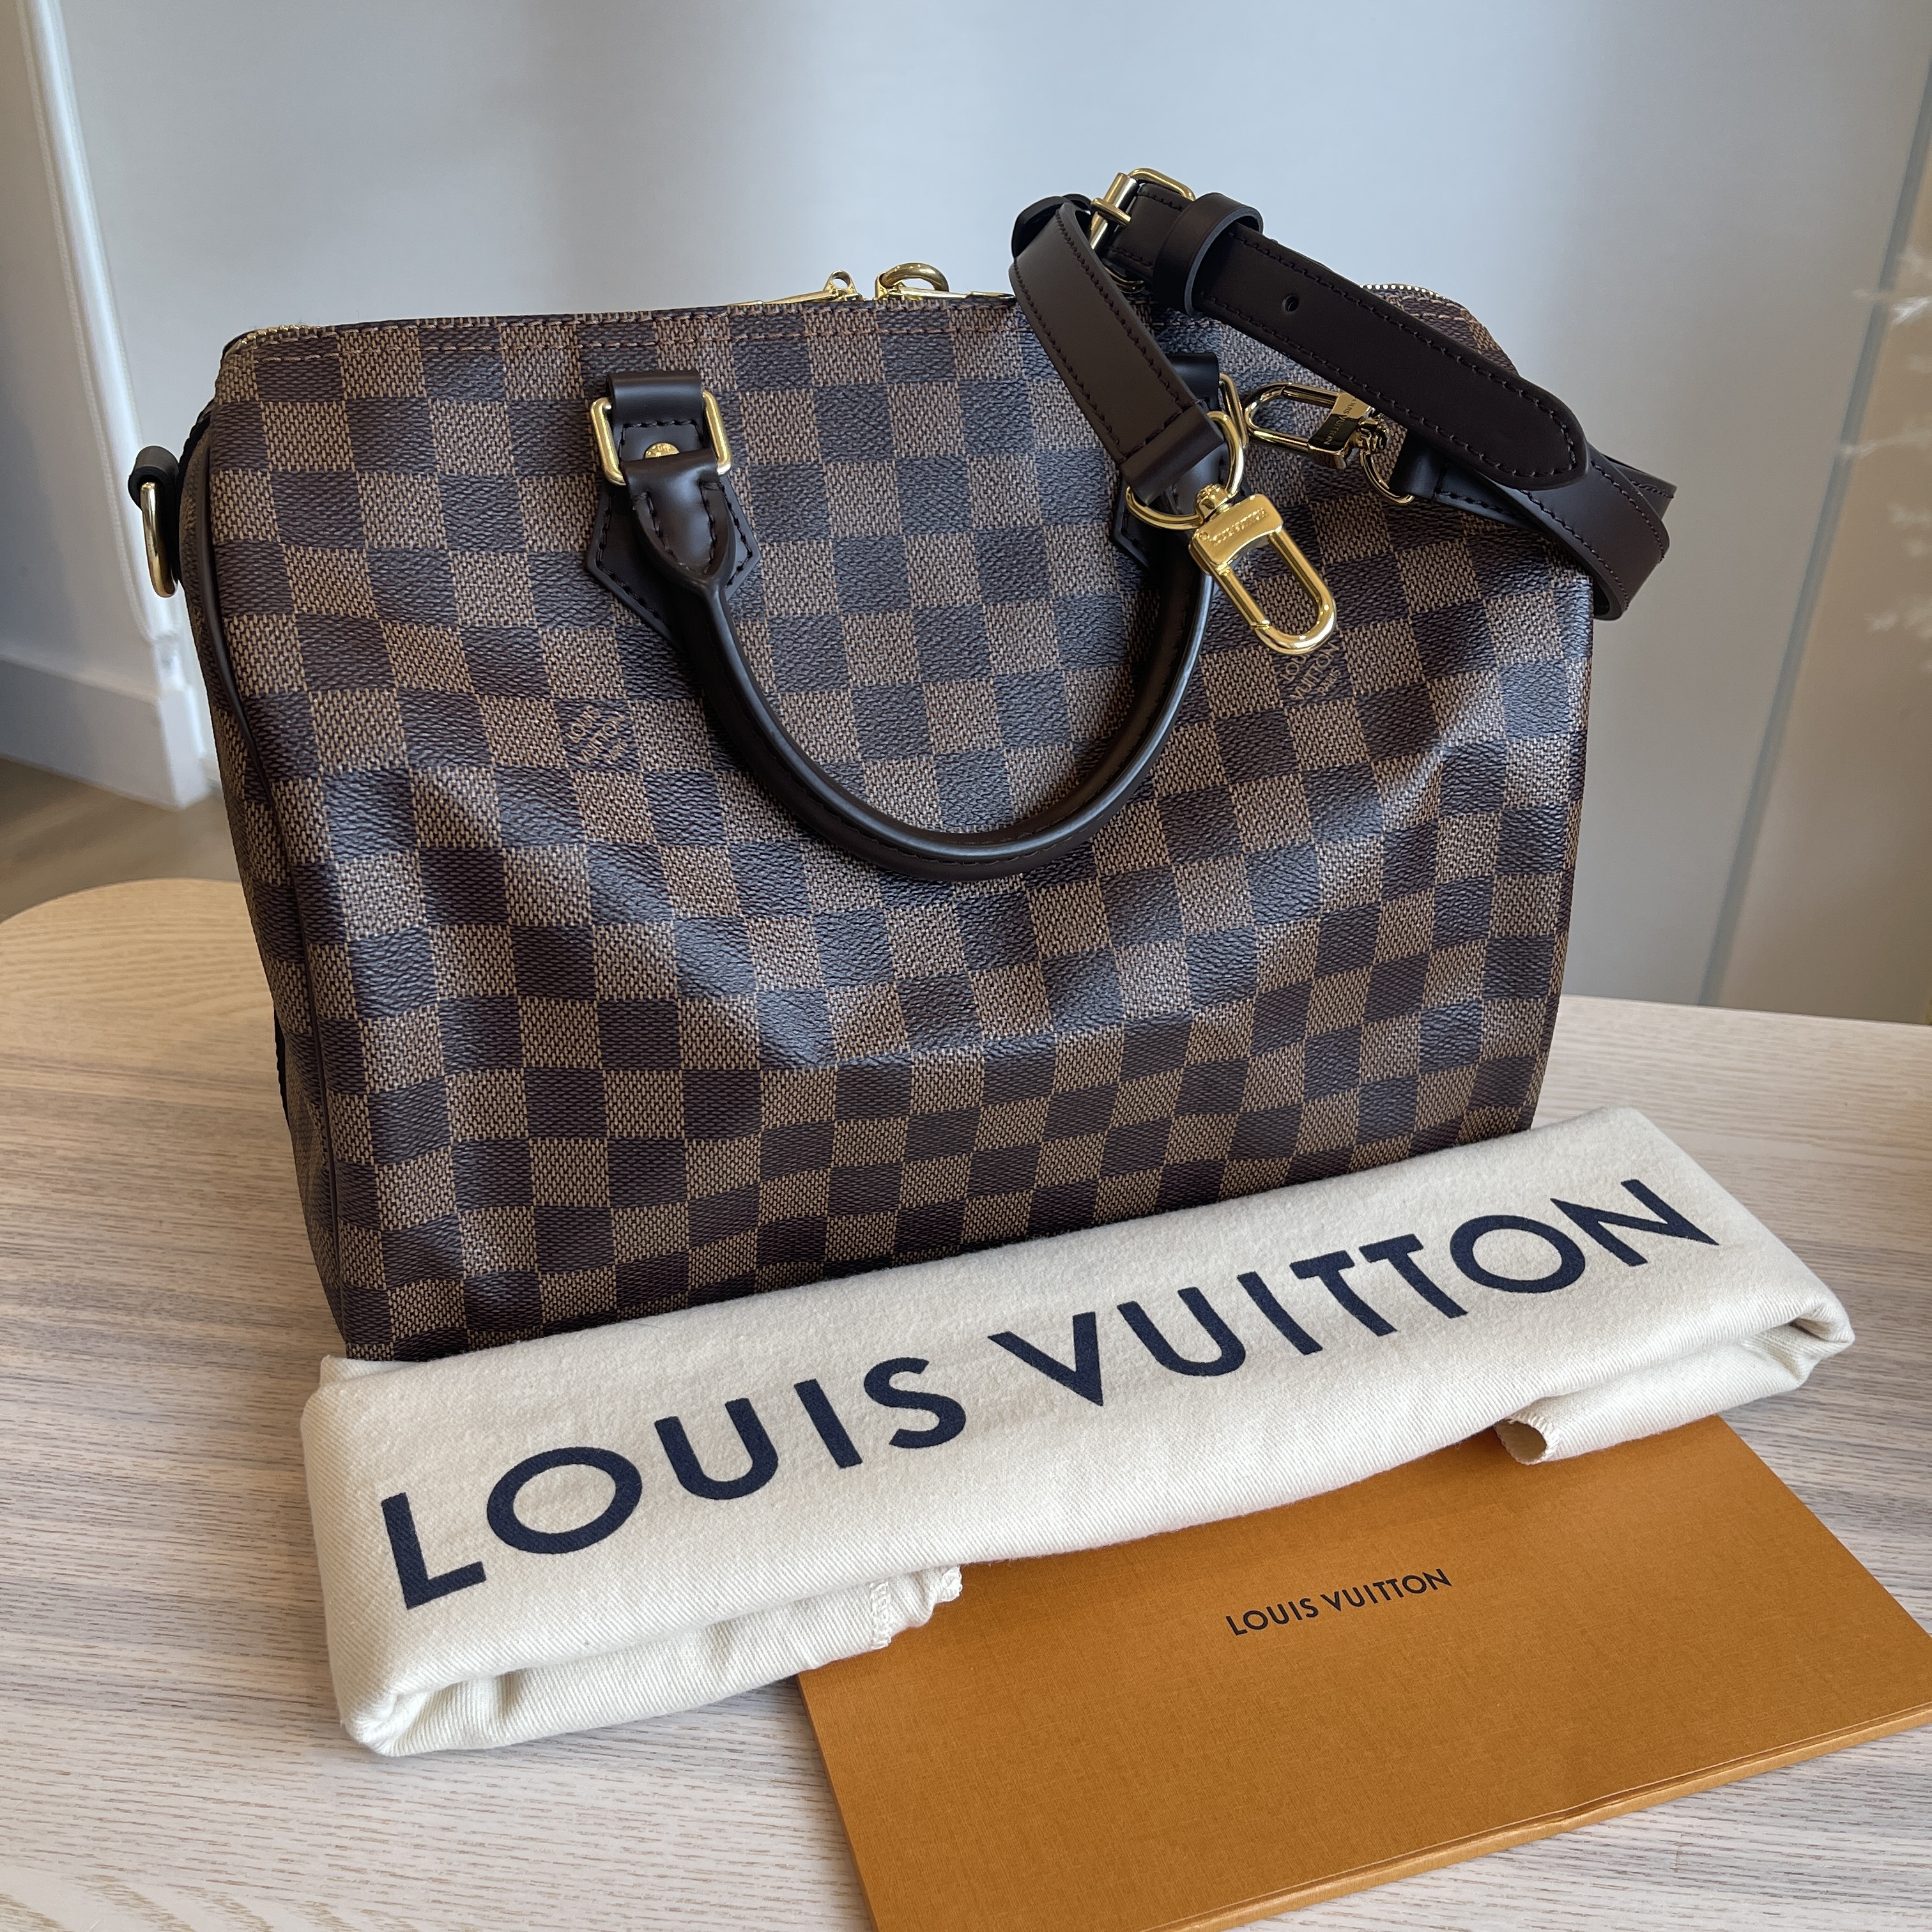 Authentic Louis Vuitton Speedy Bandouliere 30 in Damier Ebene